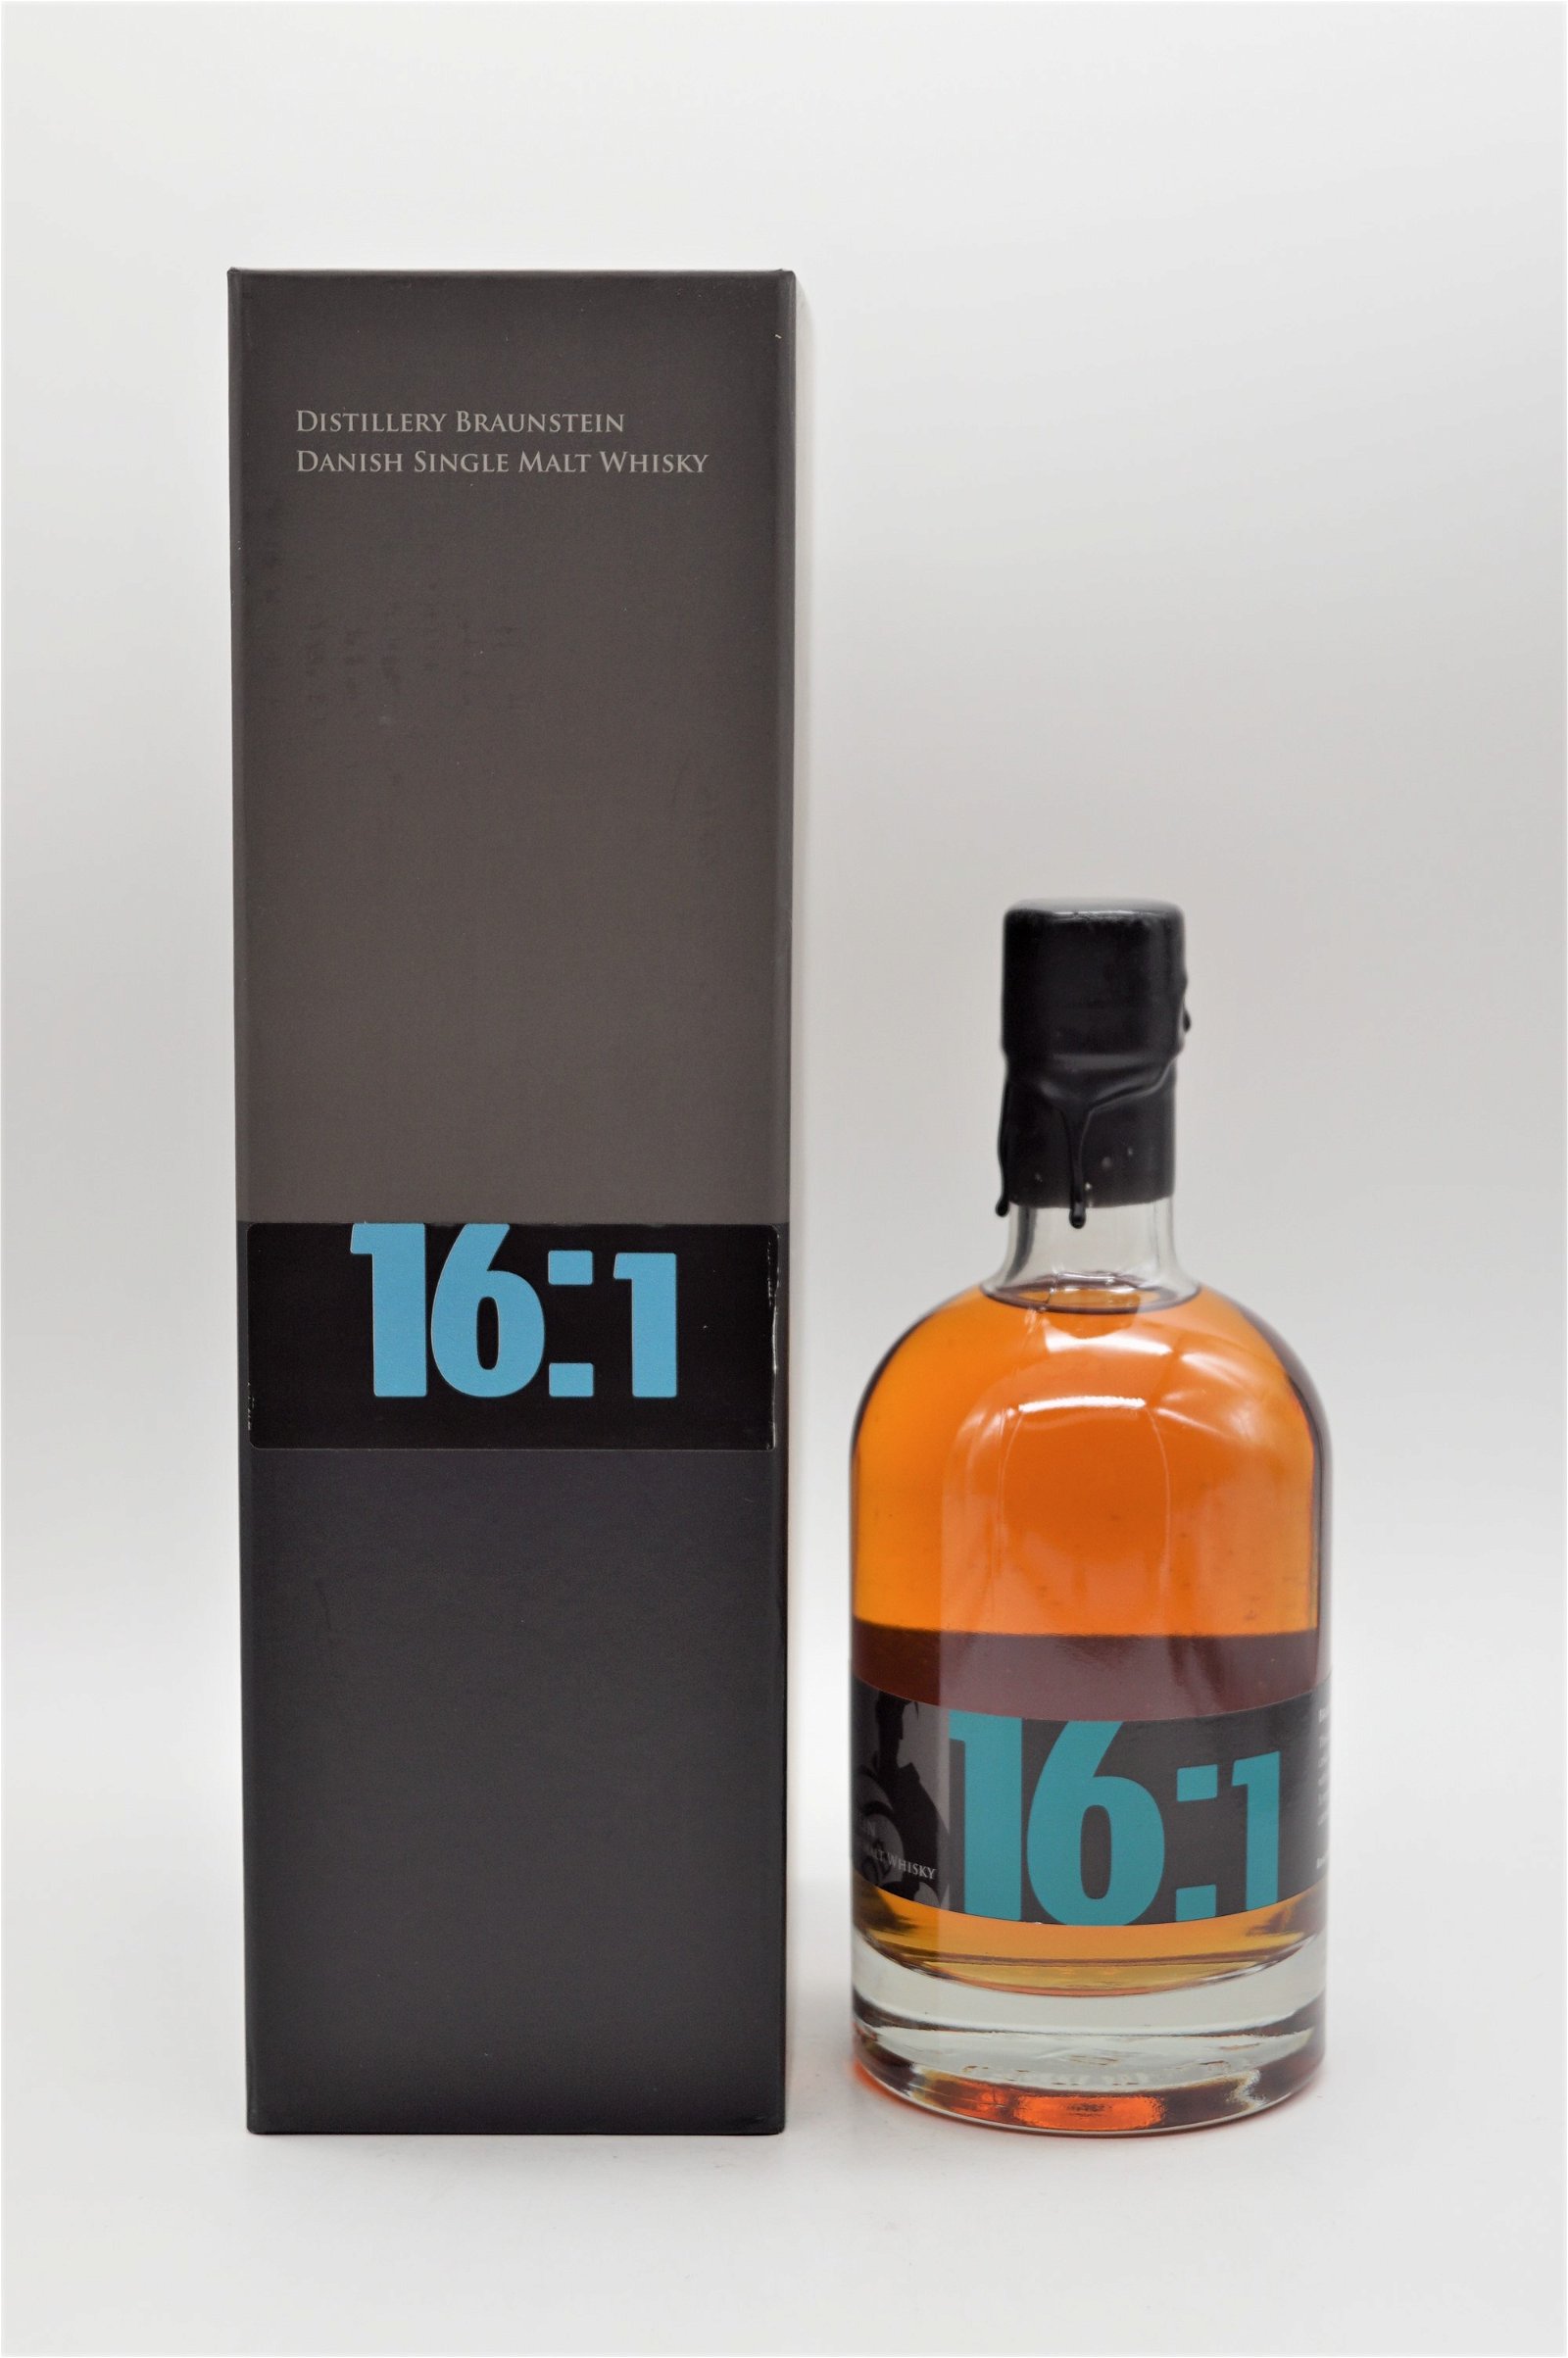 Braunstein Libary Collection 16:1 Dansk Single Malt Whisky